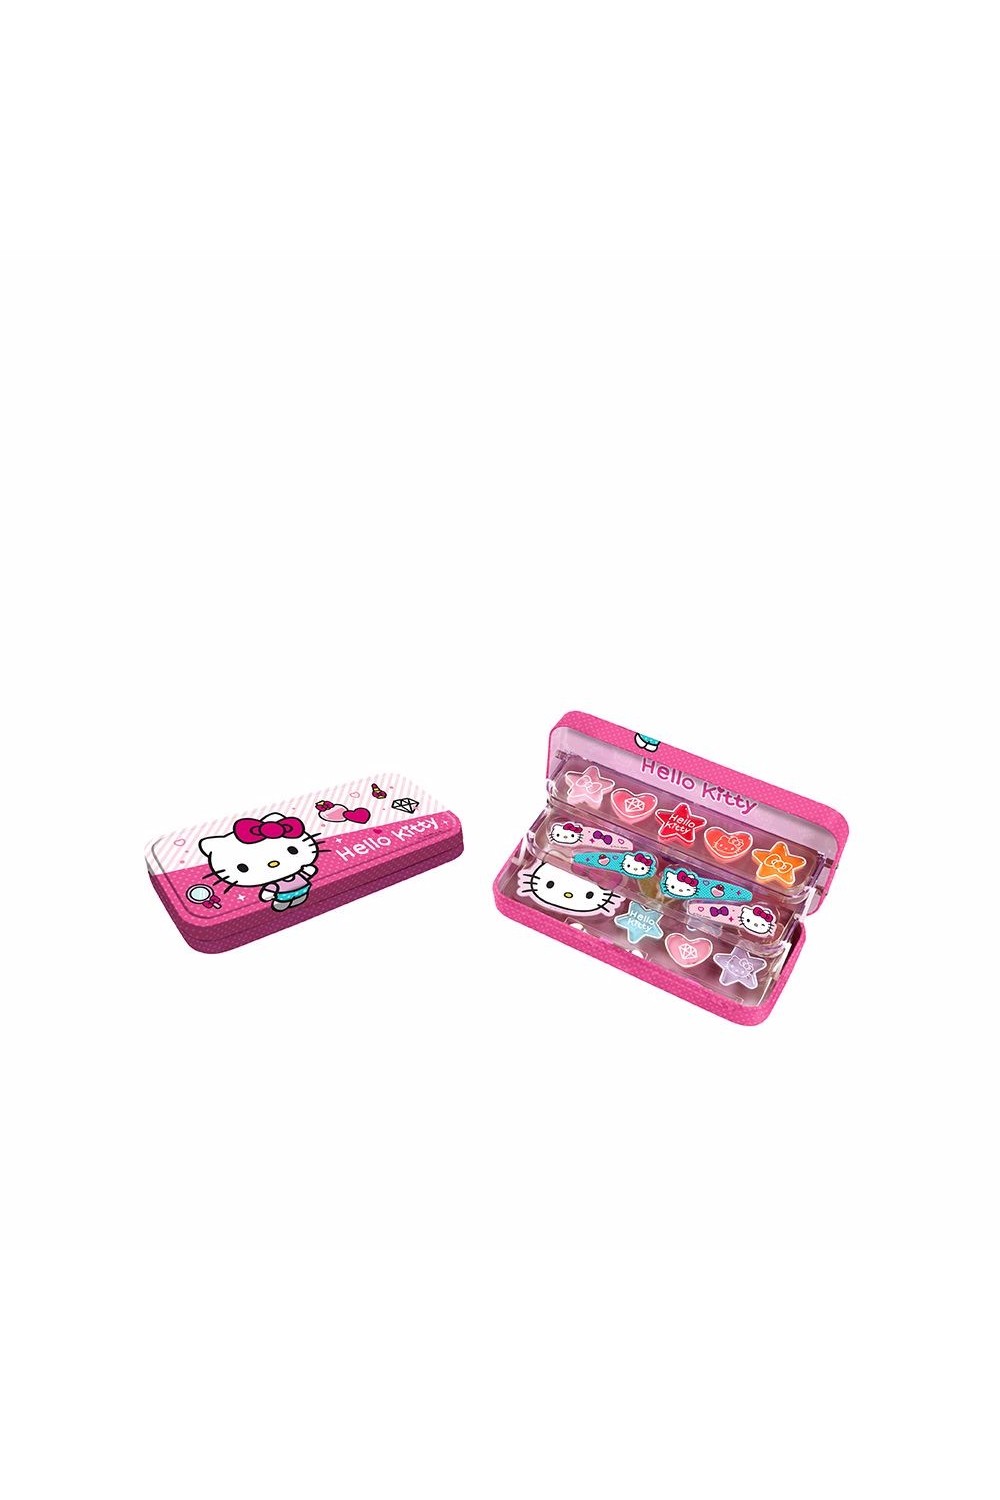 CARTOON - Hello Kitty Makeup And Hair Set